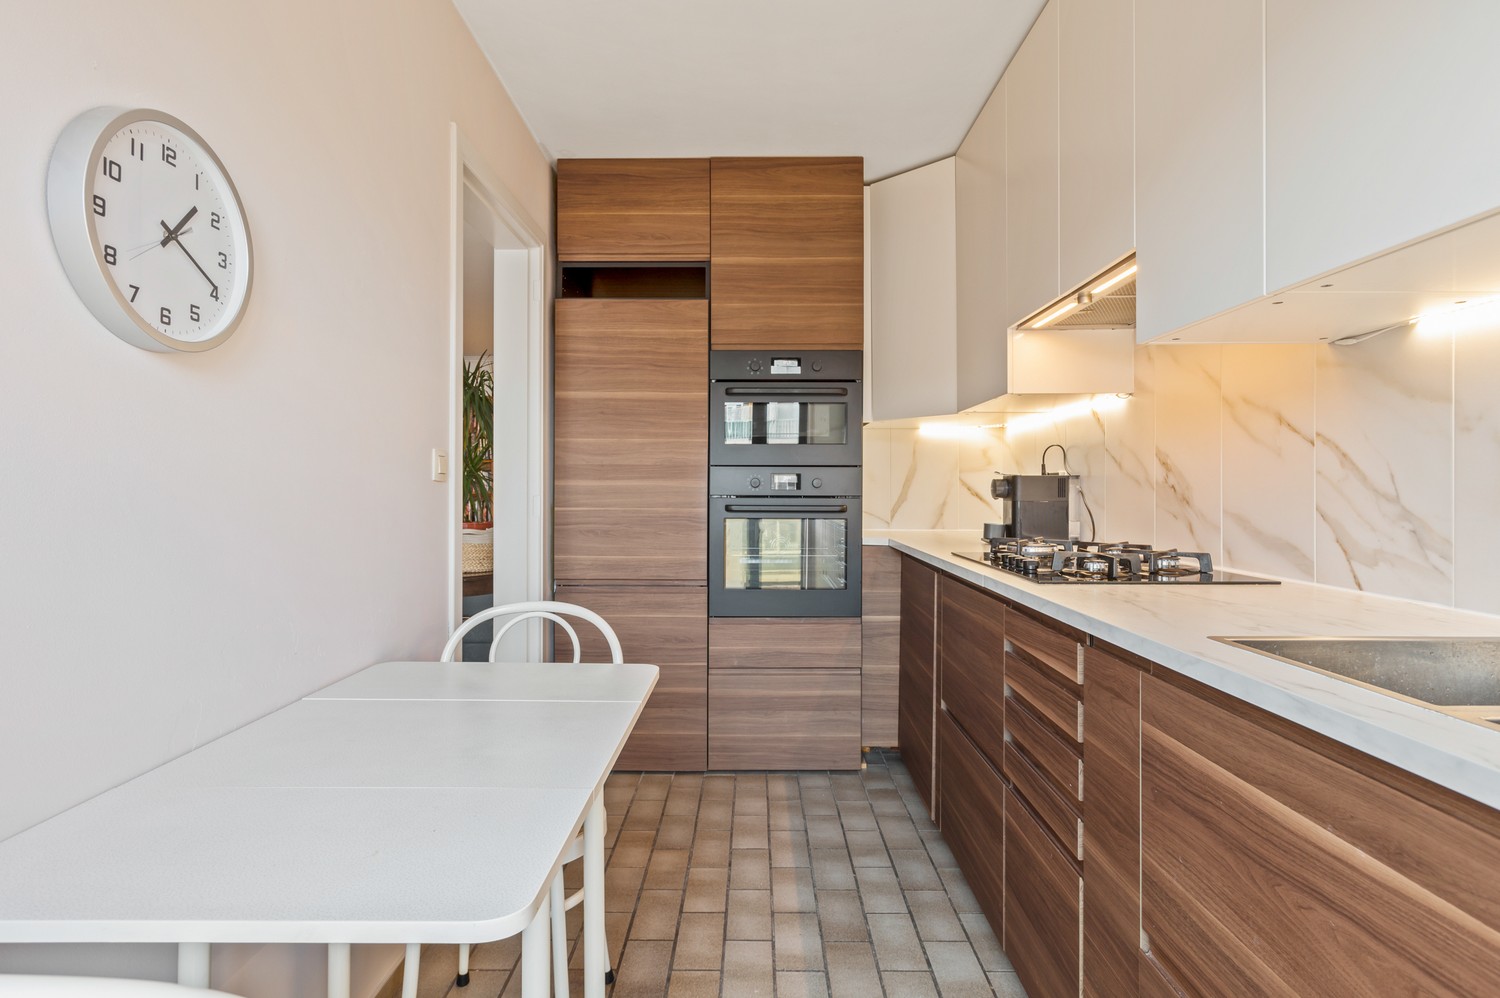 Ruim appartement met twee slaapkamers op ideale locatie in Deurne! afbeelding 10